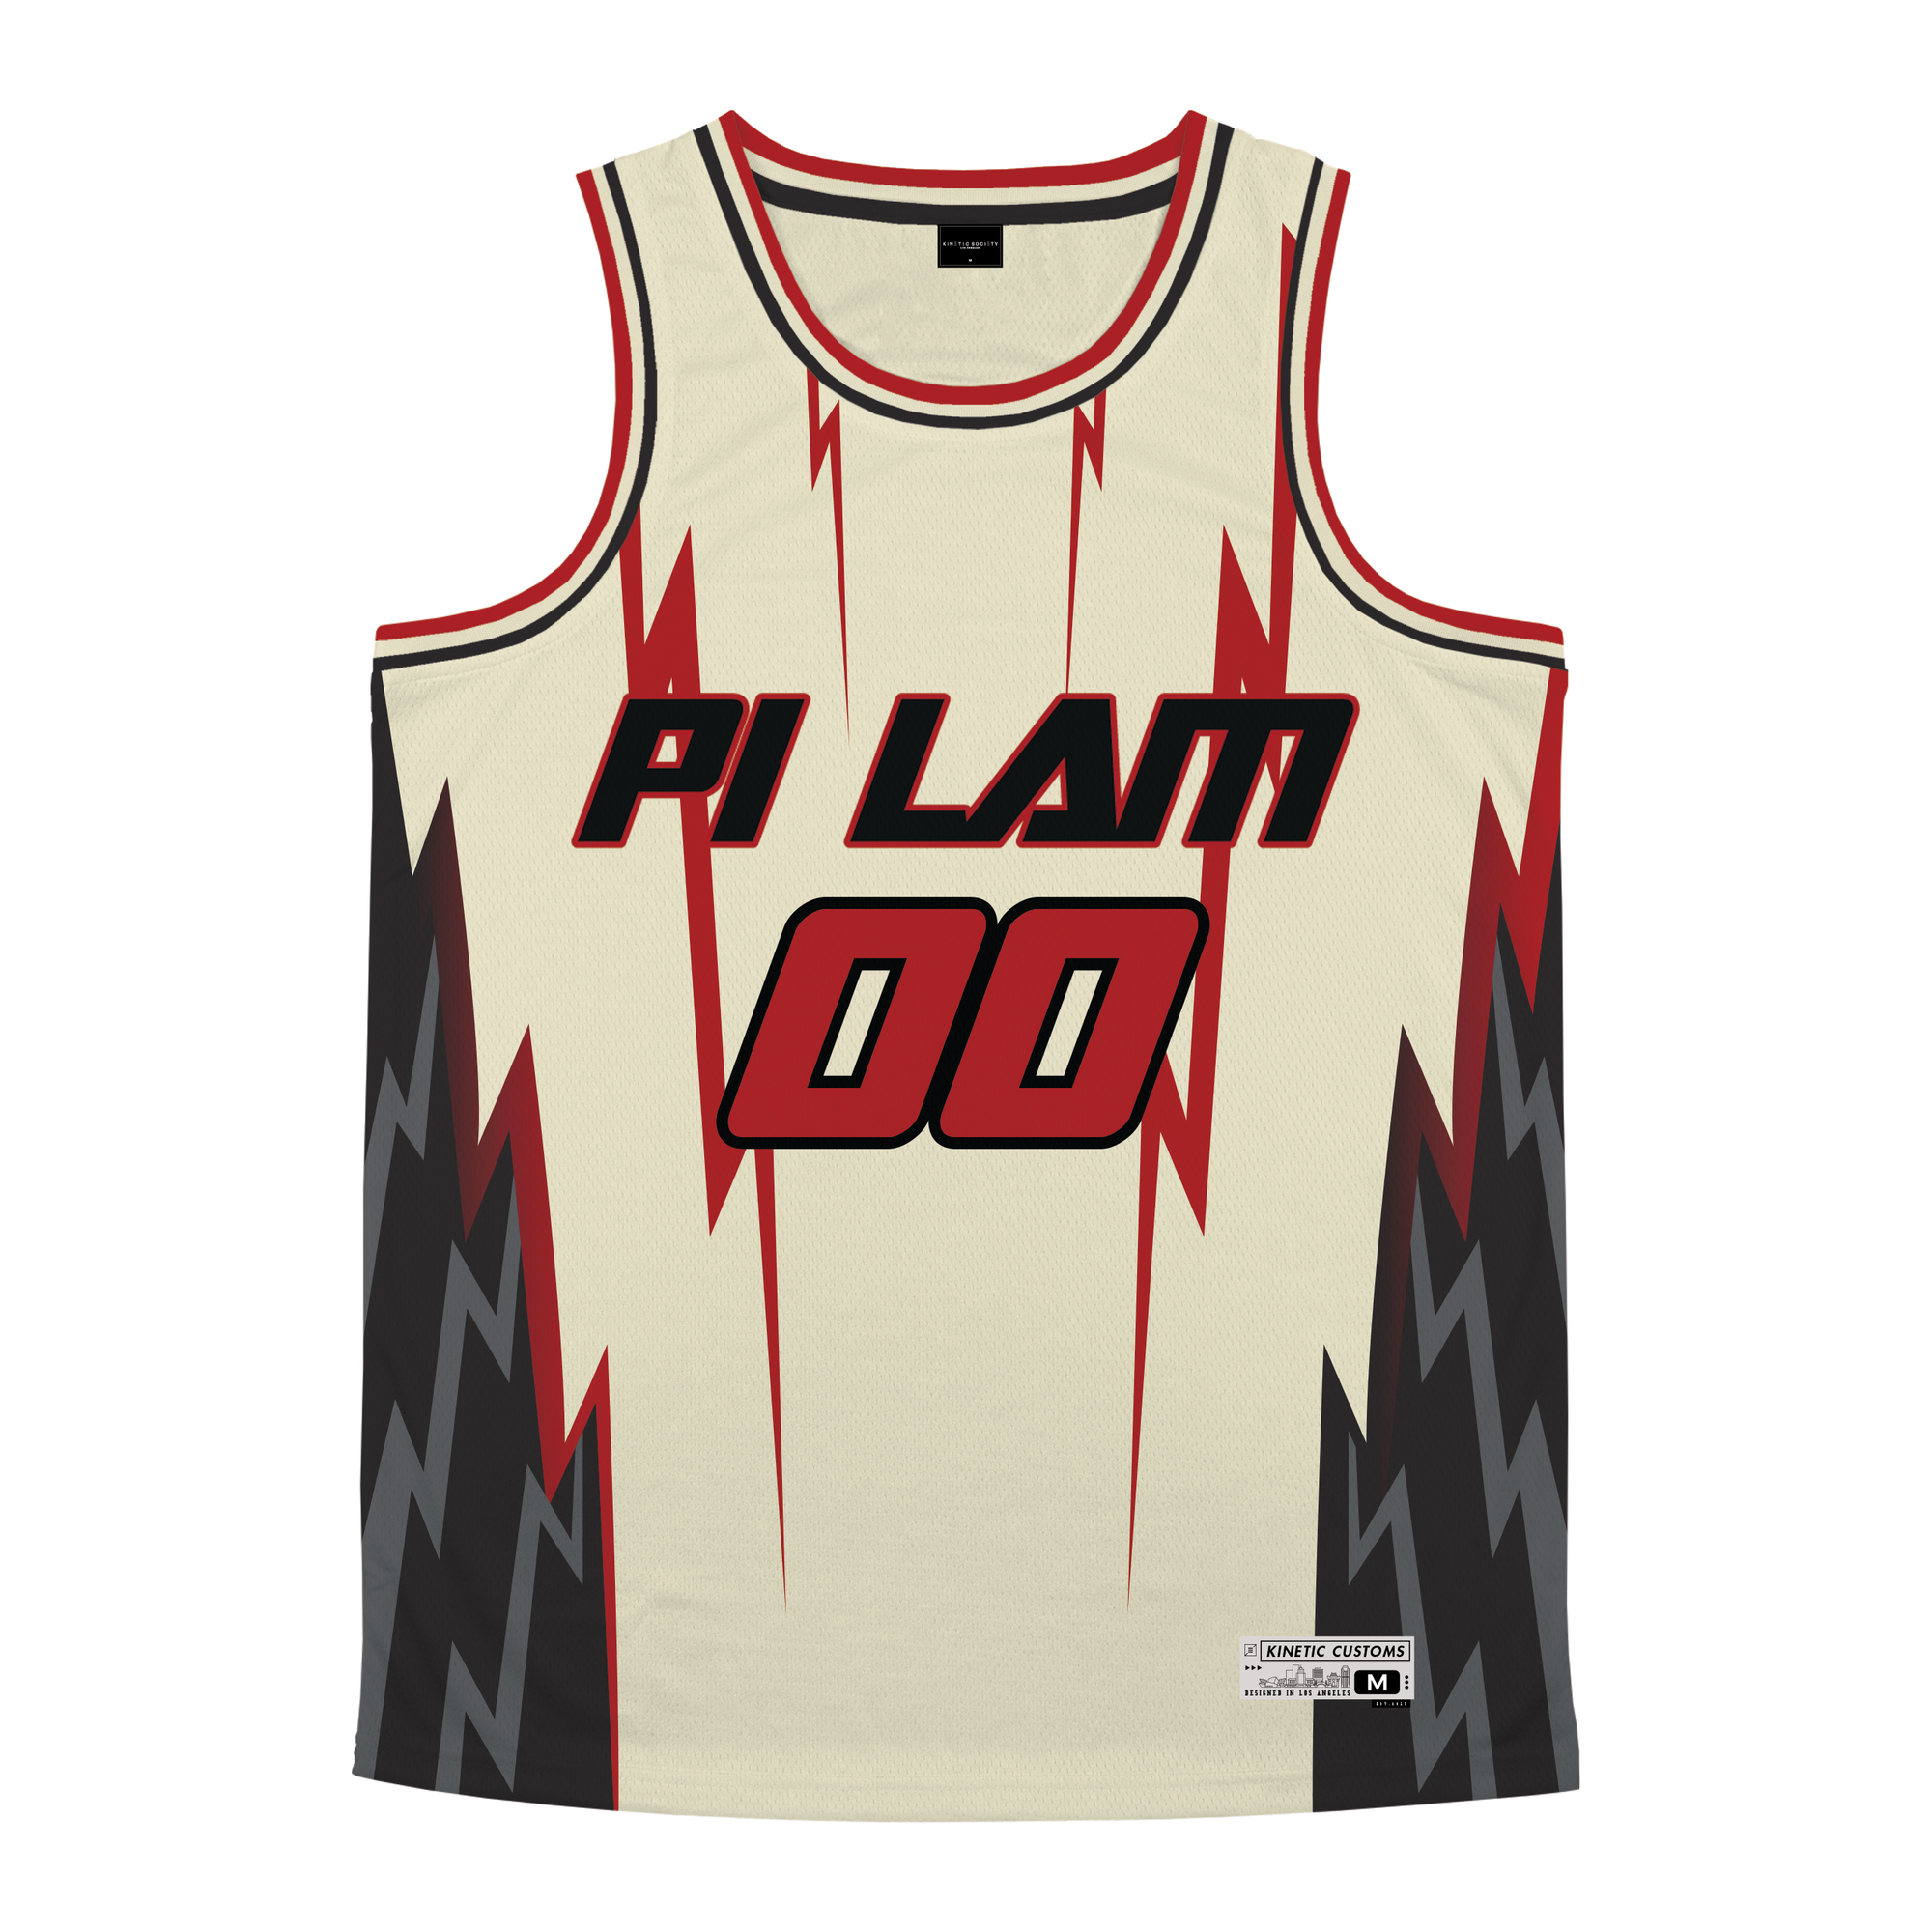 Pi Lambda Phi - Rapture Basketball Jersey